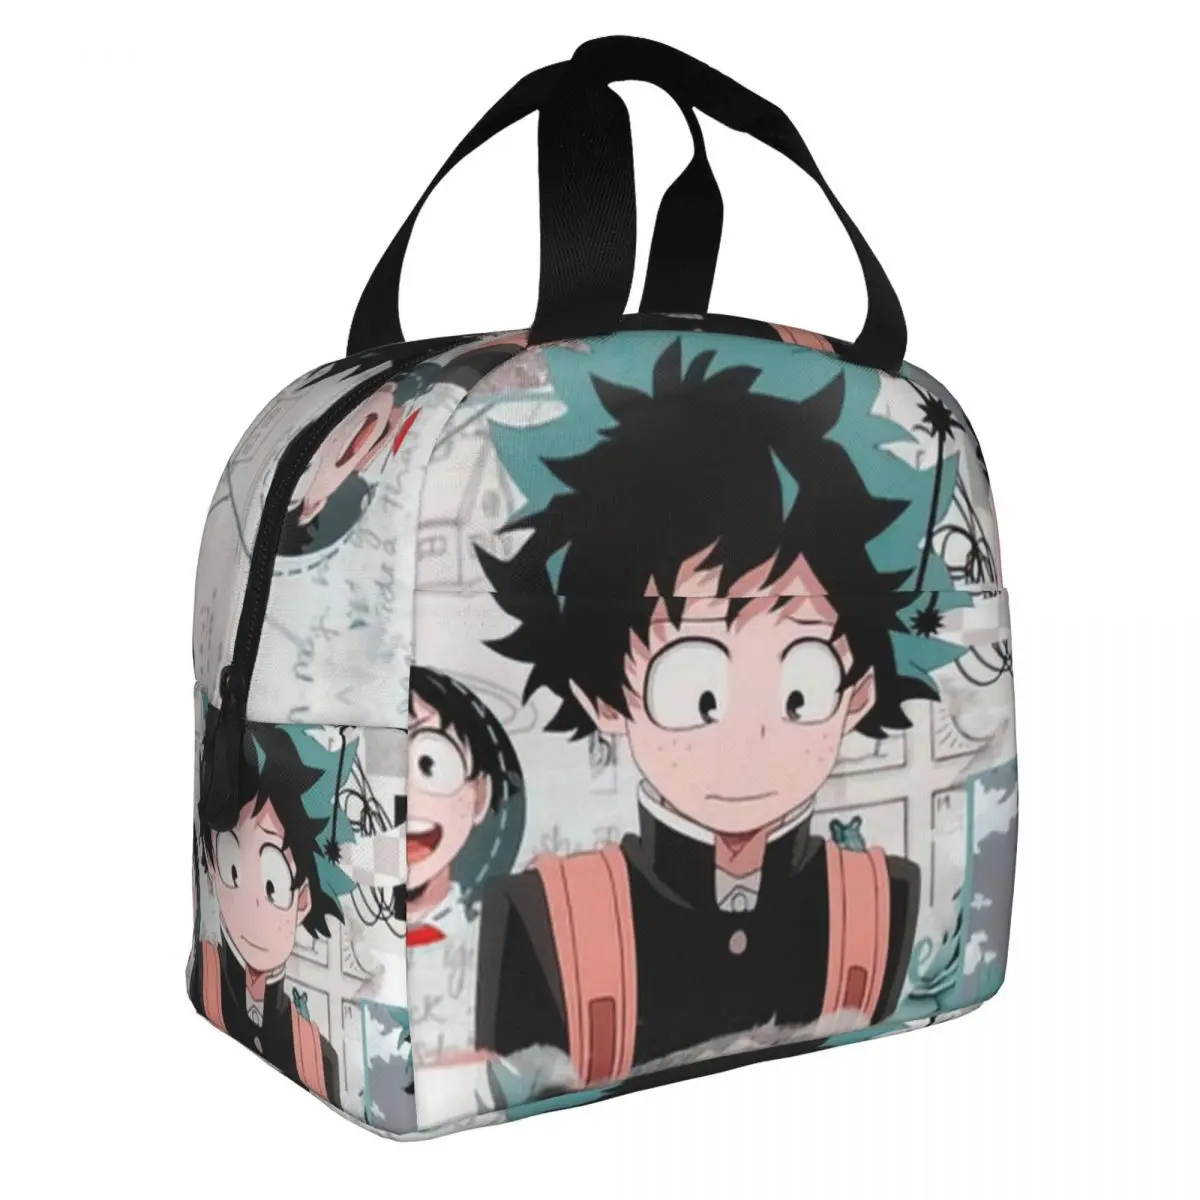 Izuku Midoriya Pitbull Cartoon Lunch Bento Bags Portable Aluminum Foil thickened Thermal Cloth Lunch Bag for Boys and Girls